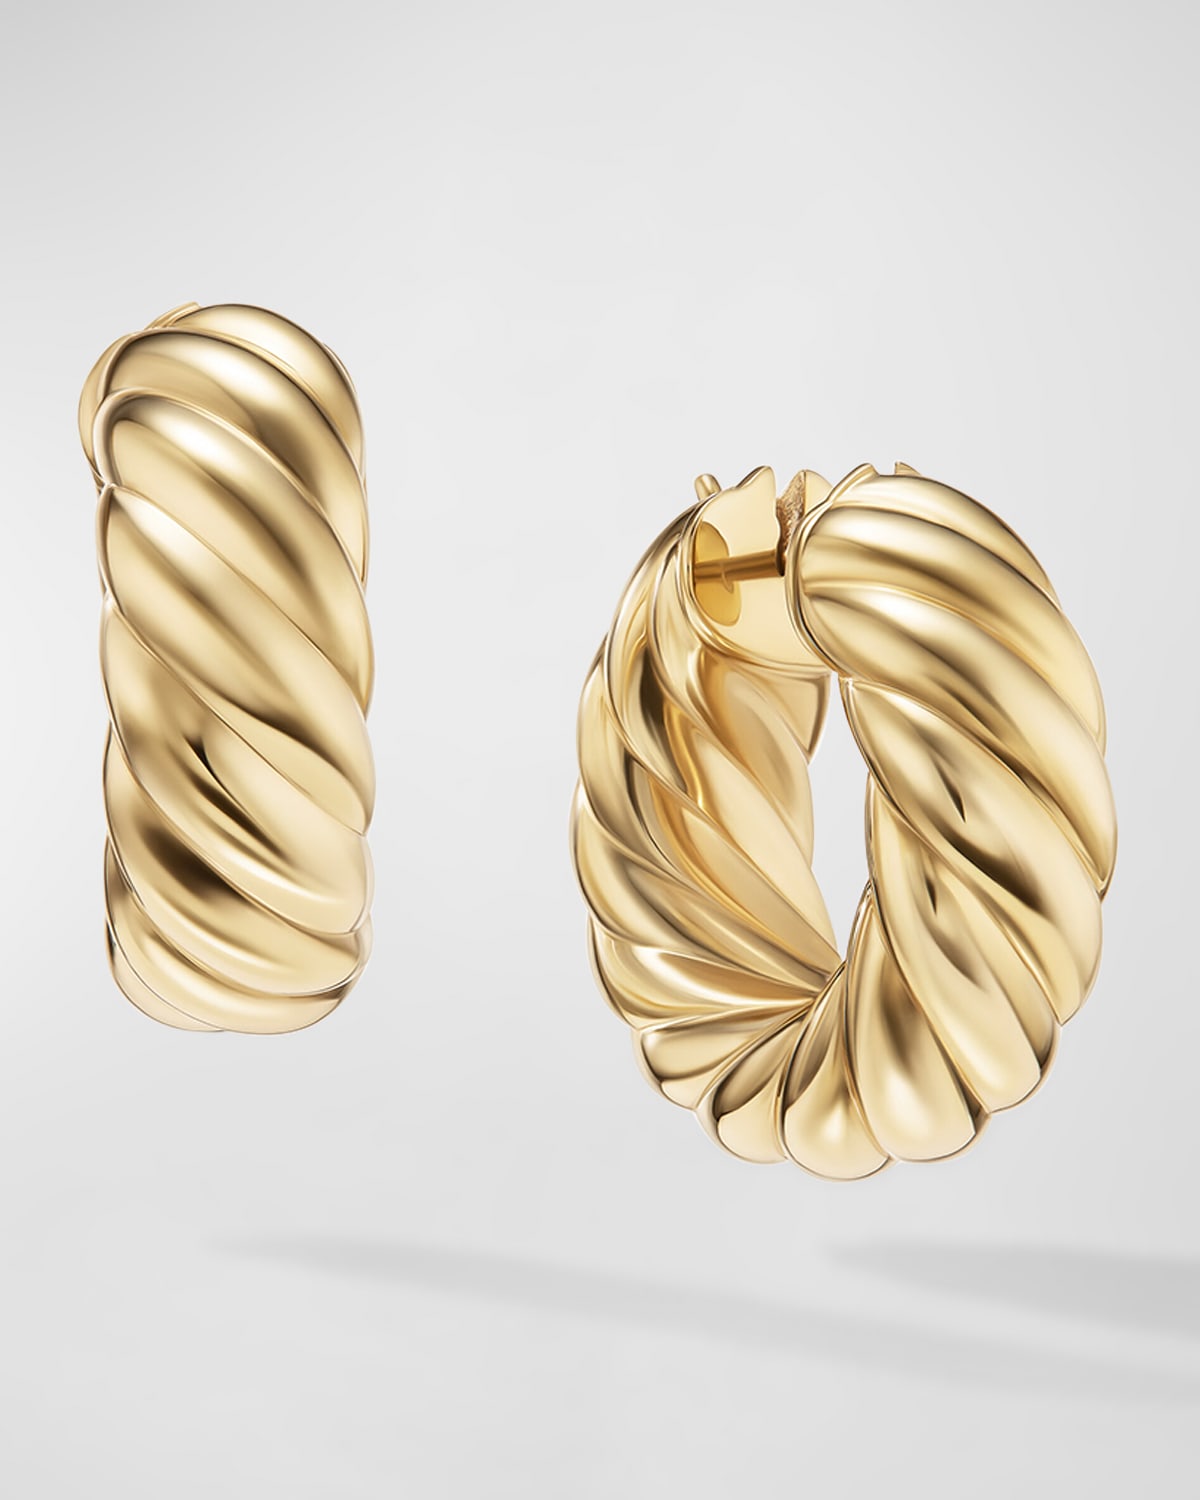 David Yurman Carlyle Hoop Earrings with Diamonds in 18K Gold, 4mm, 1